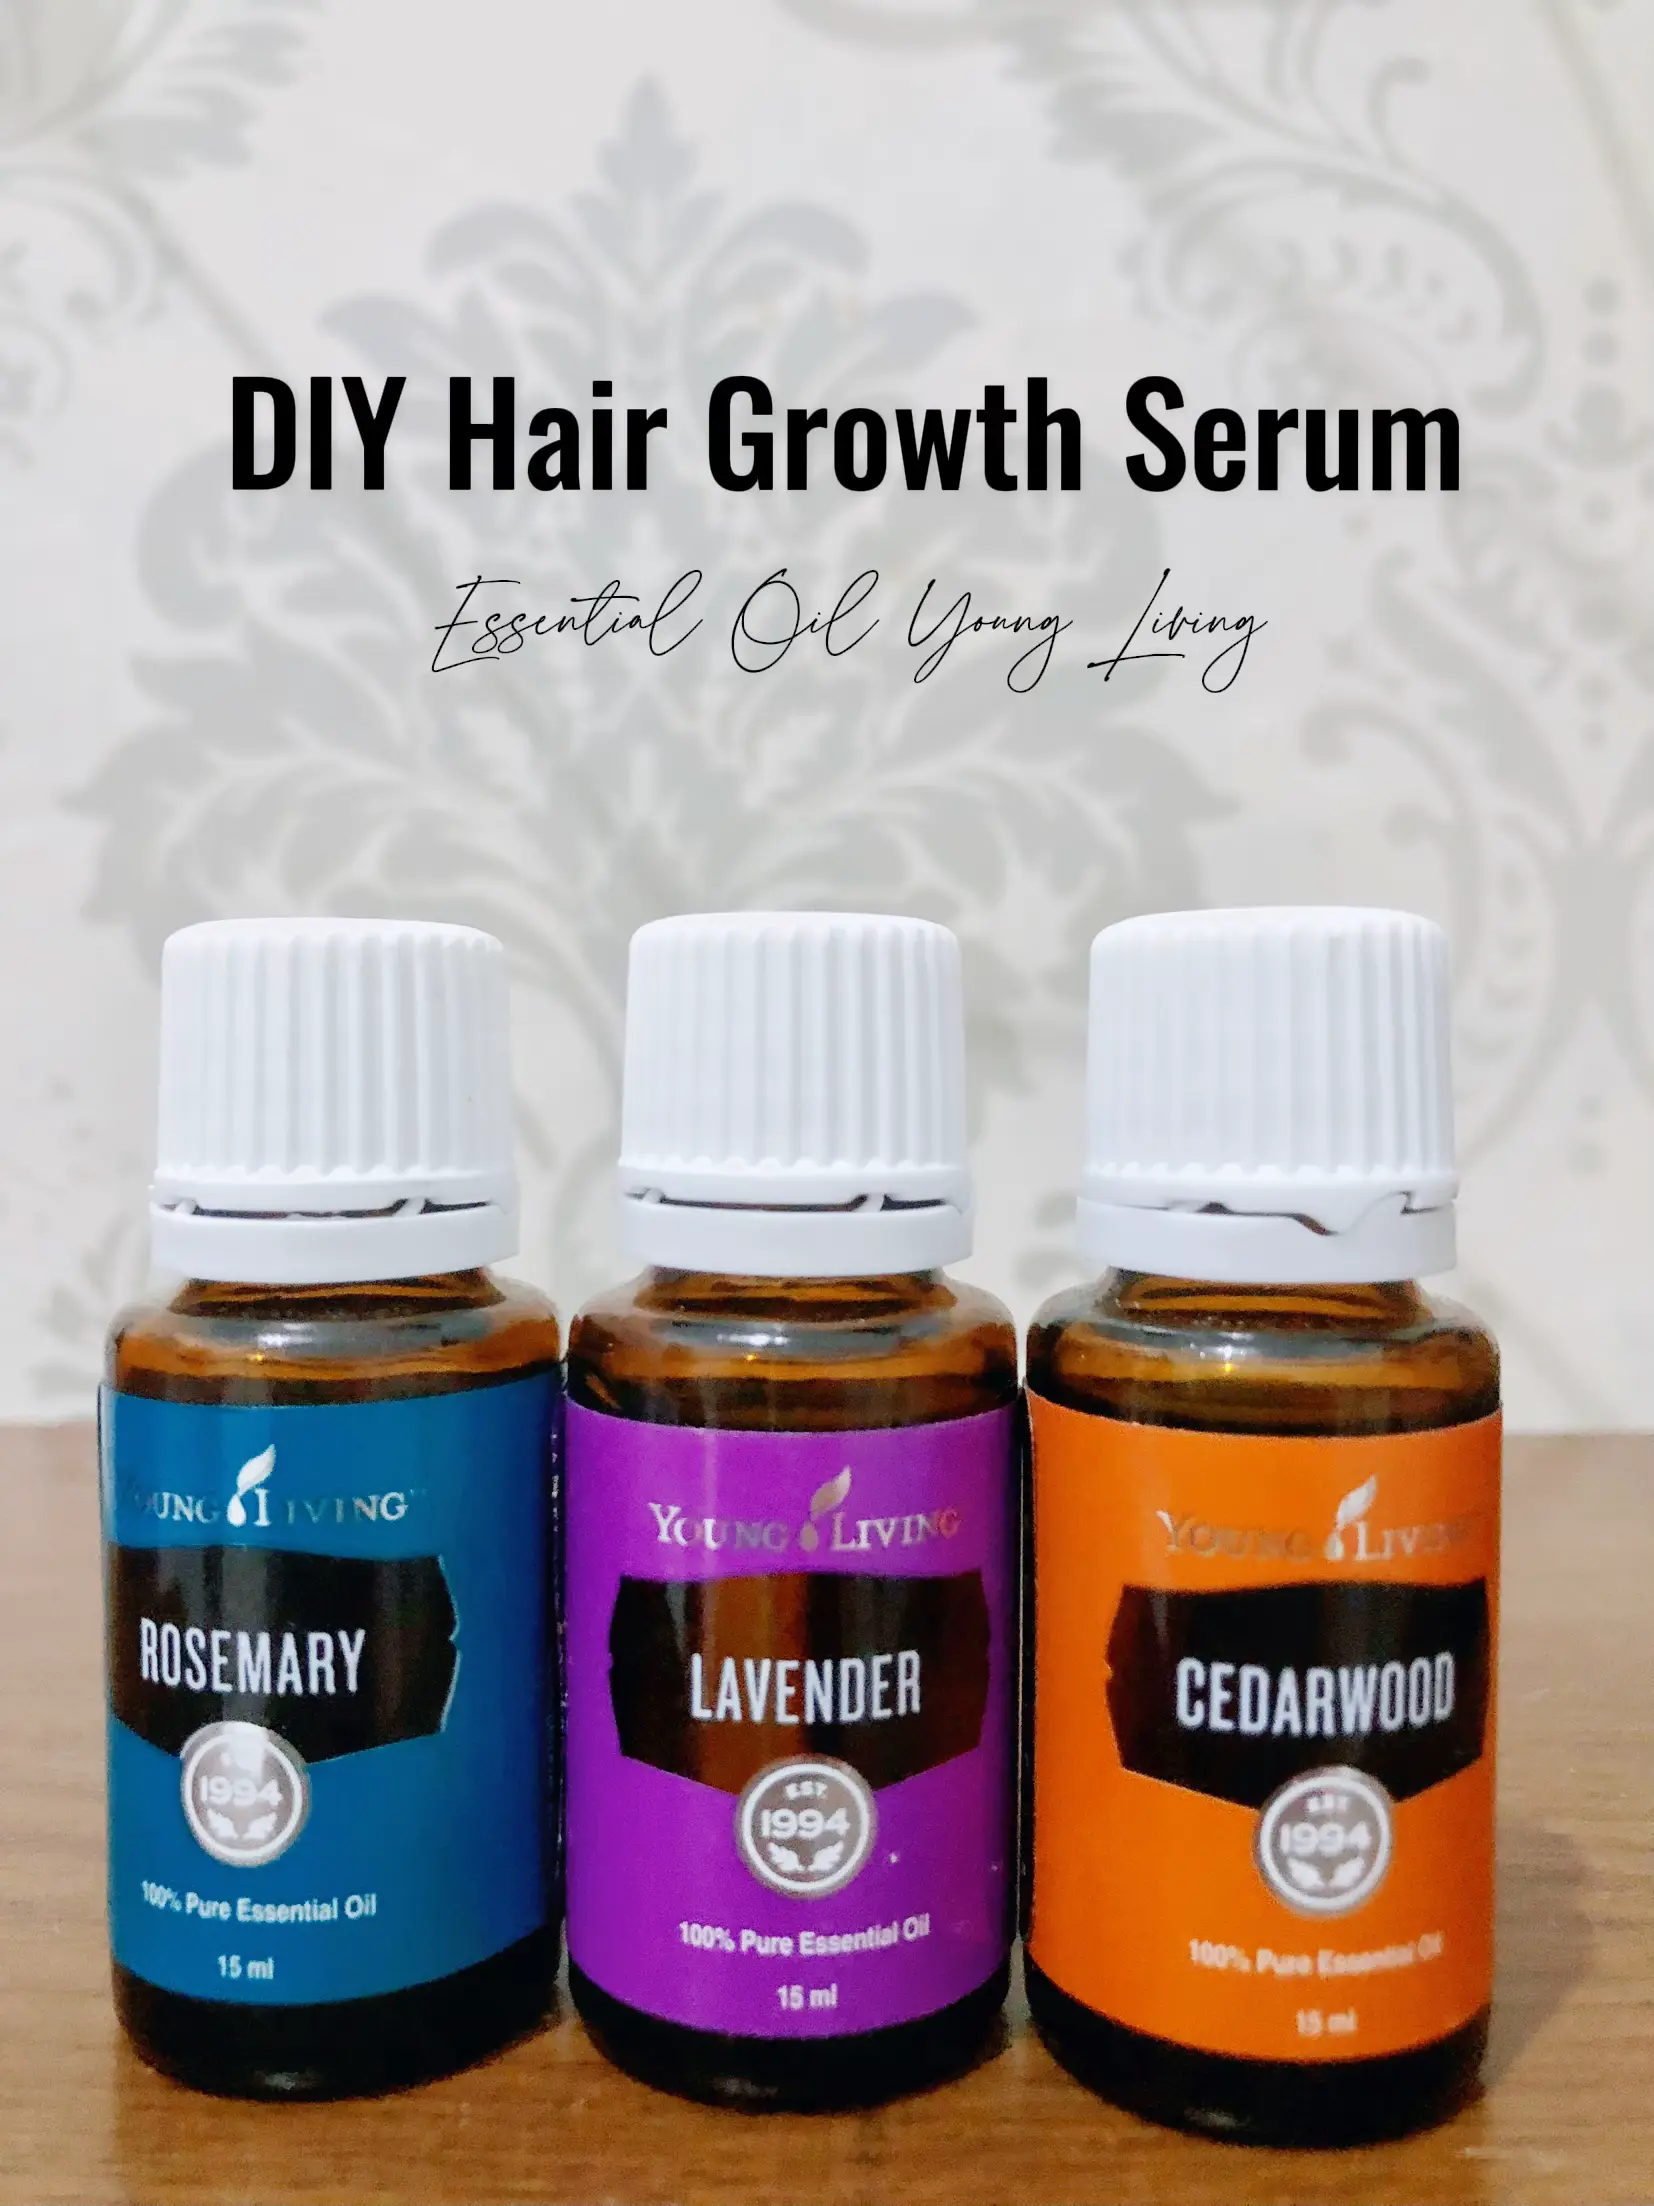 DIY Hair Growth Serum | Gallery posted by bintang kusuma | Lemon8